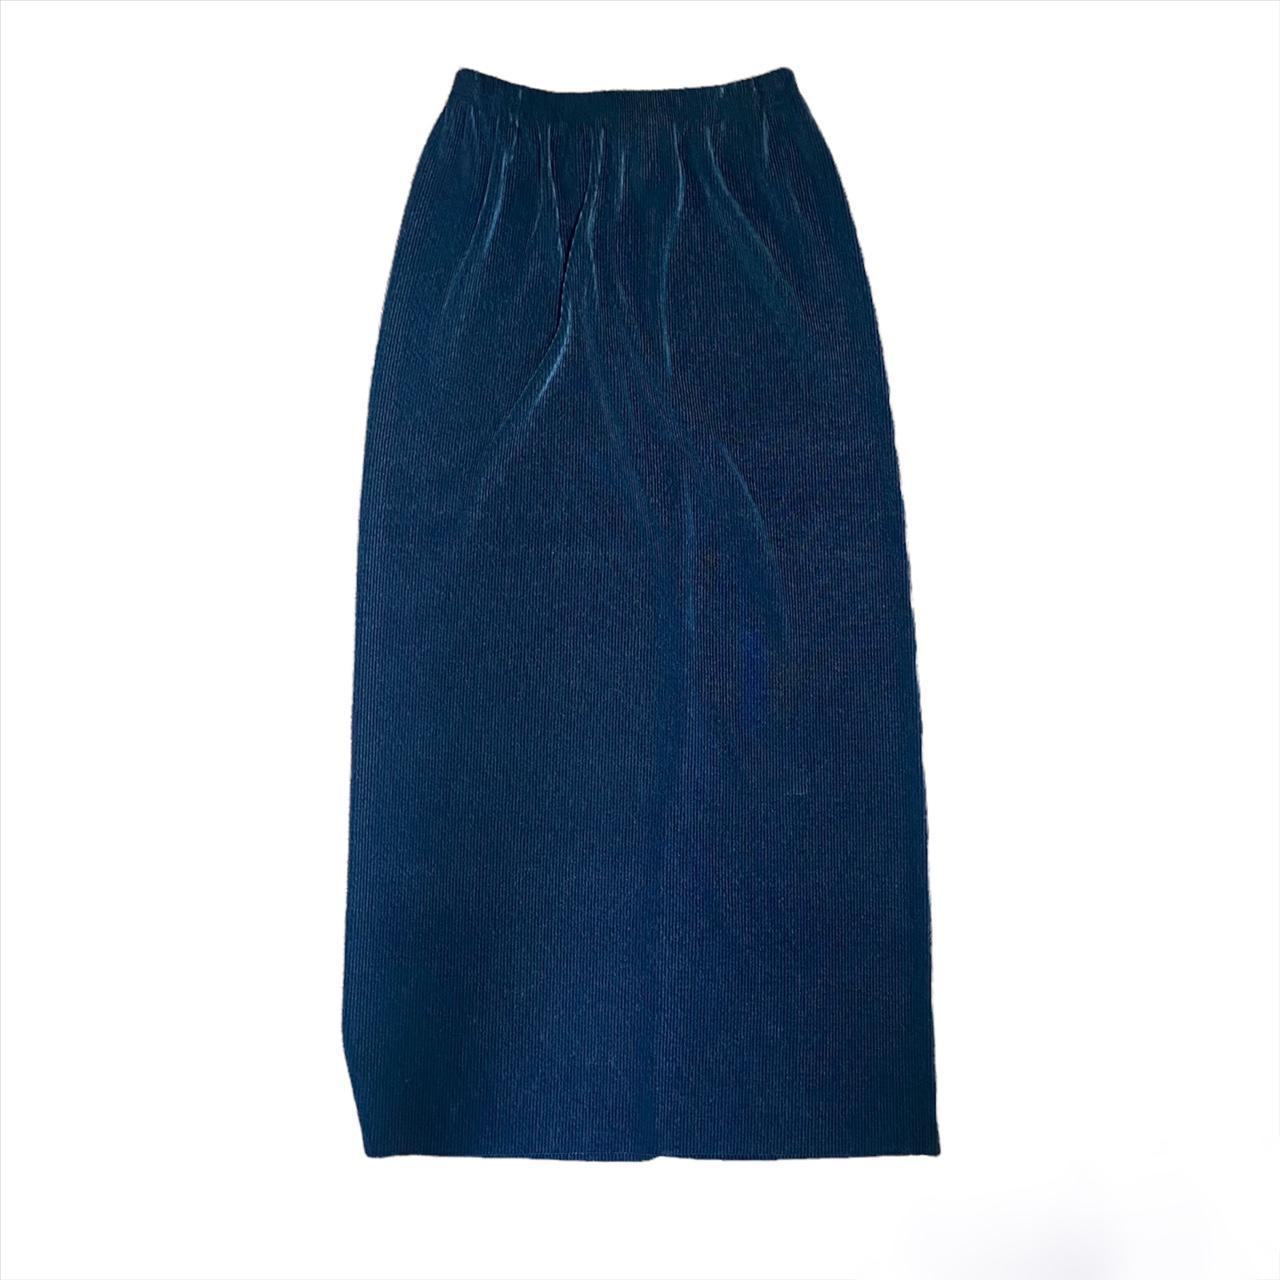 Product Image 1 - Vintage ribbed black skirt

Size medium